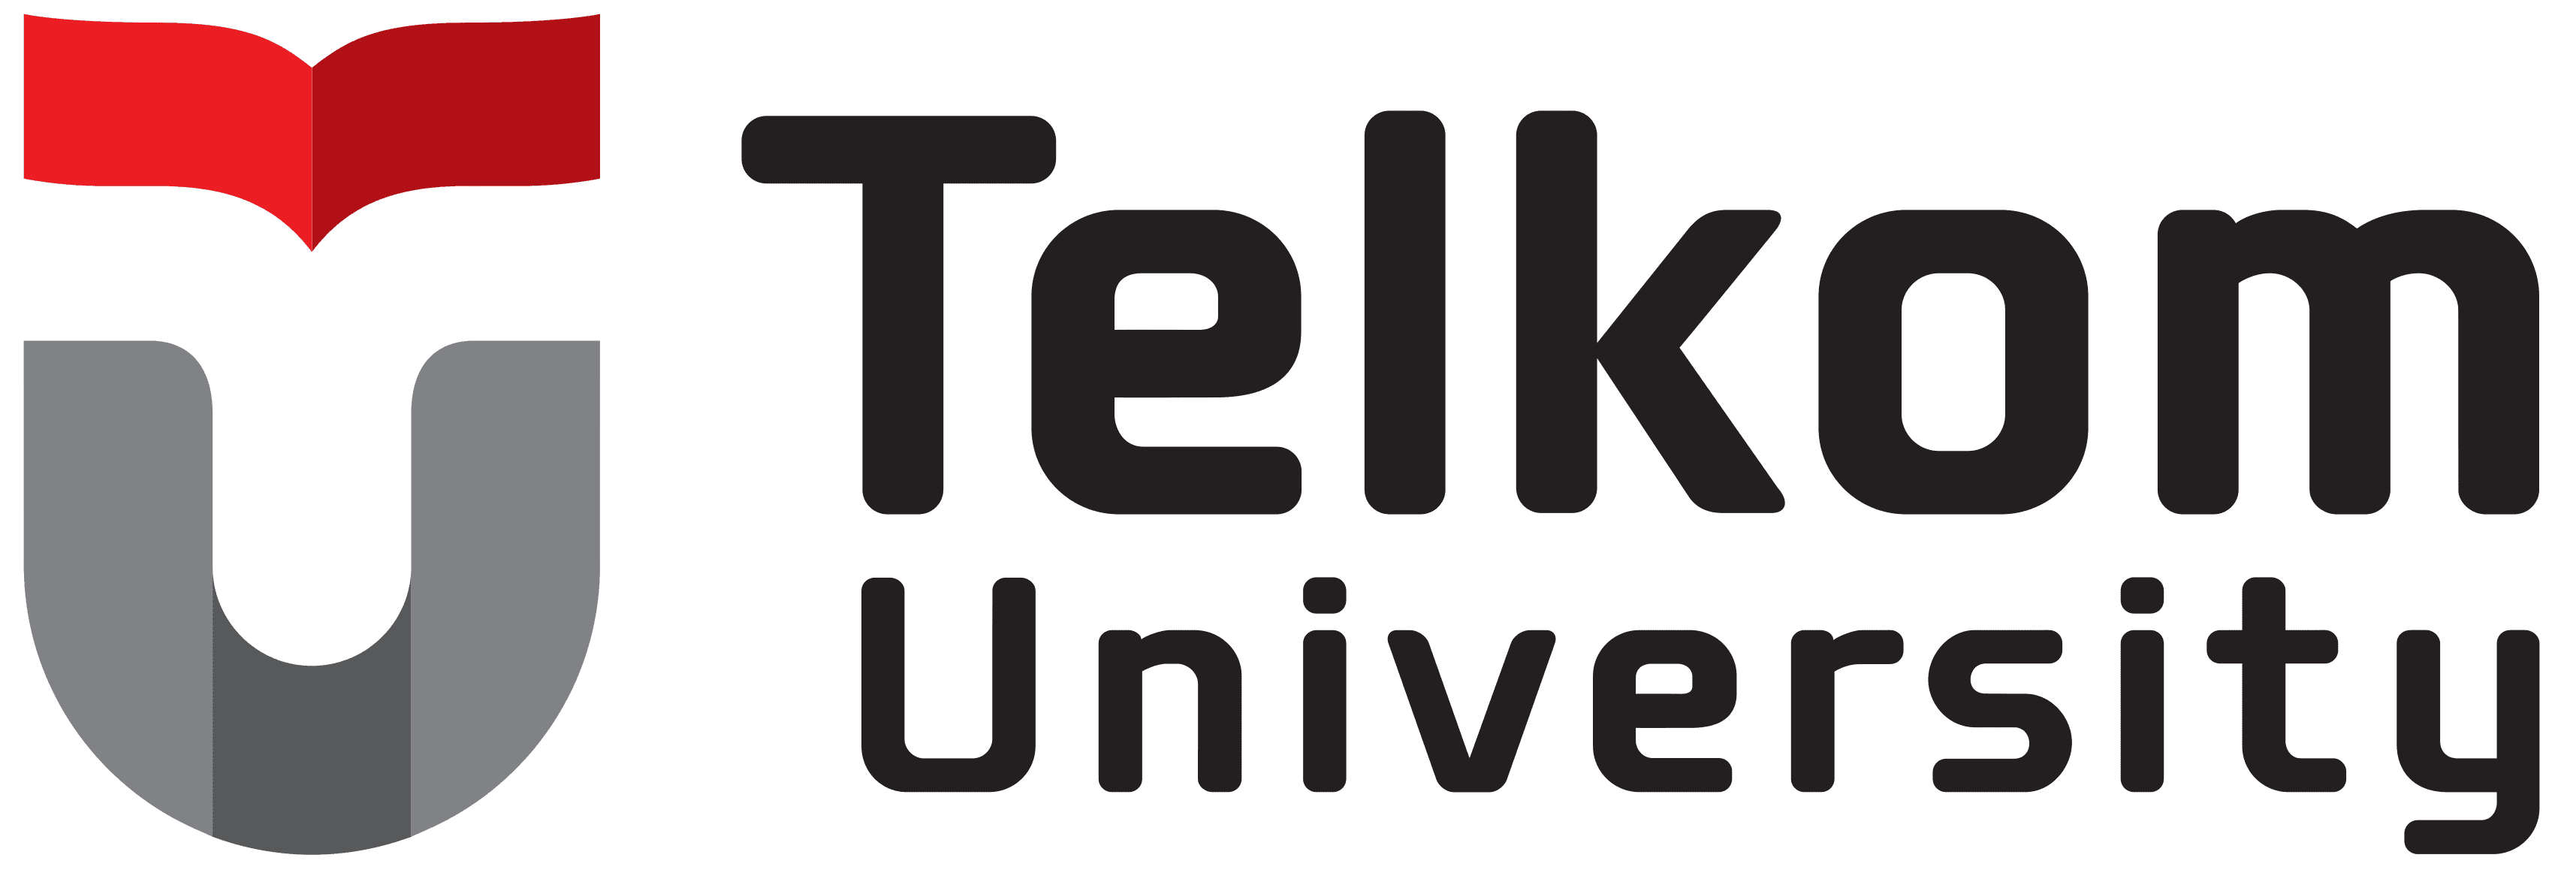 Logo Telkom University Landscape